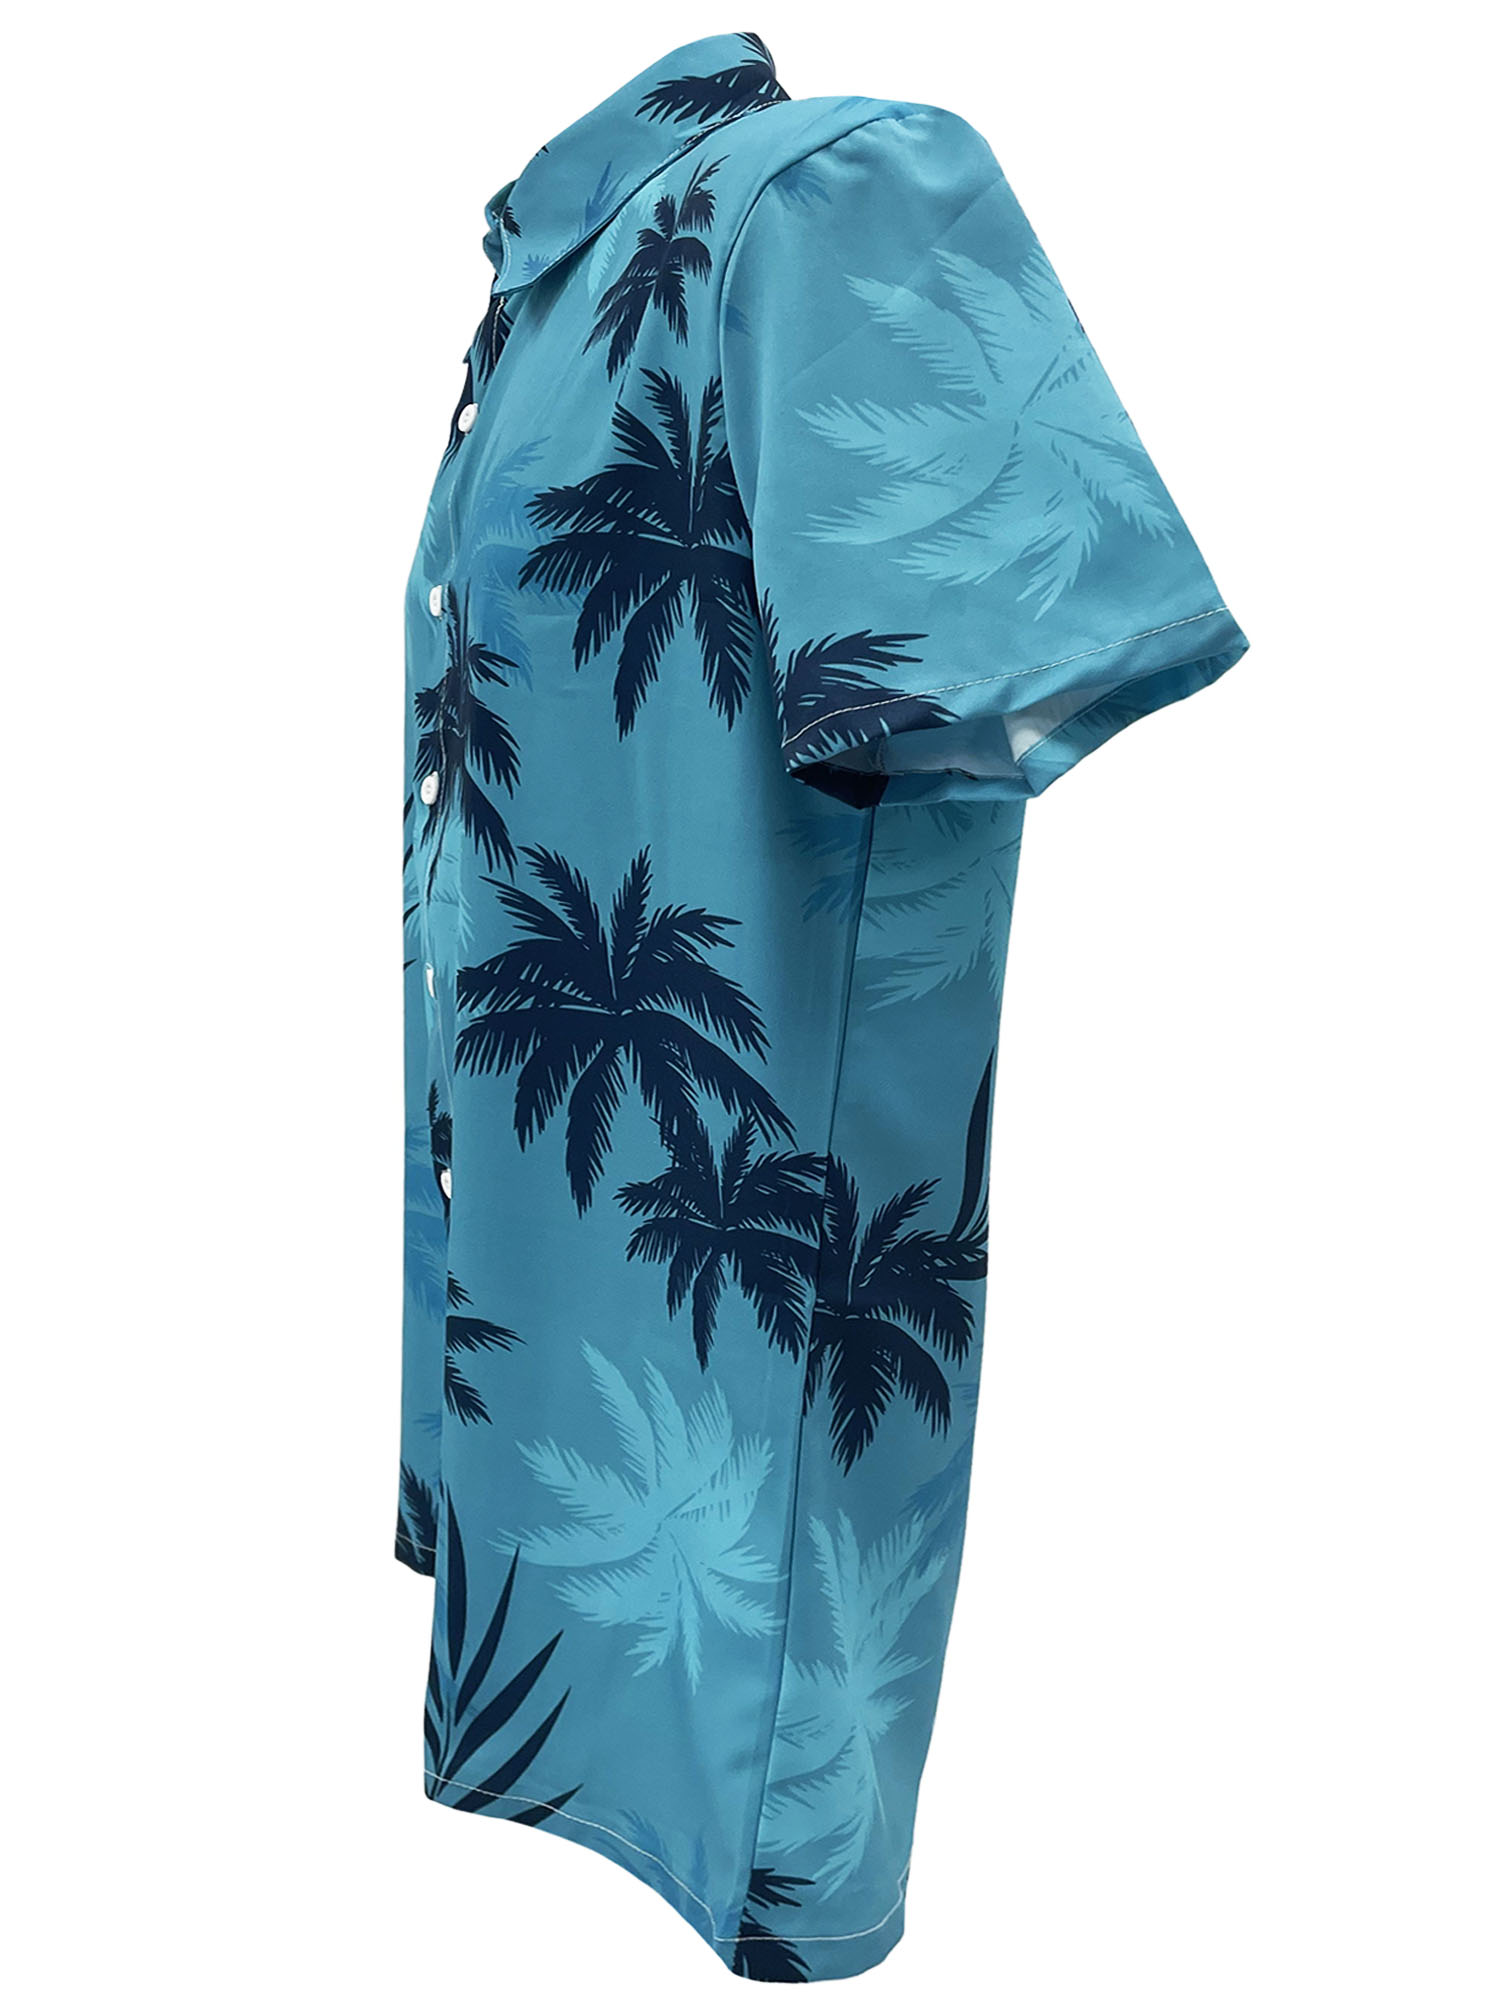 Tommy Vercetti Grand Theft Auto Vice City Costume Palm Trees Hawaiian Shirt